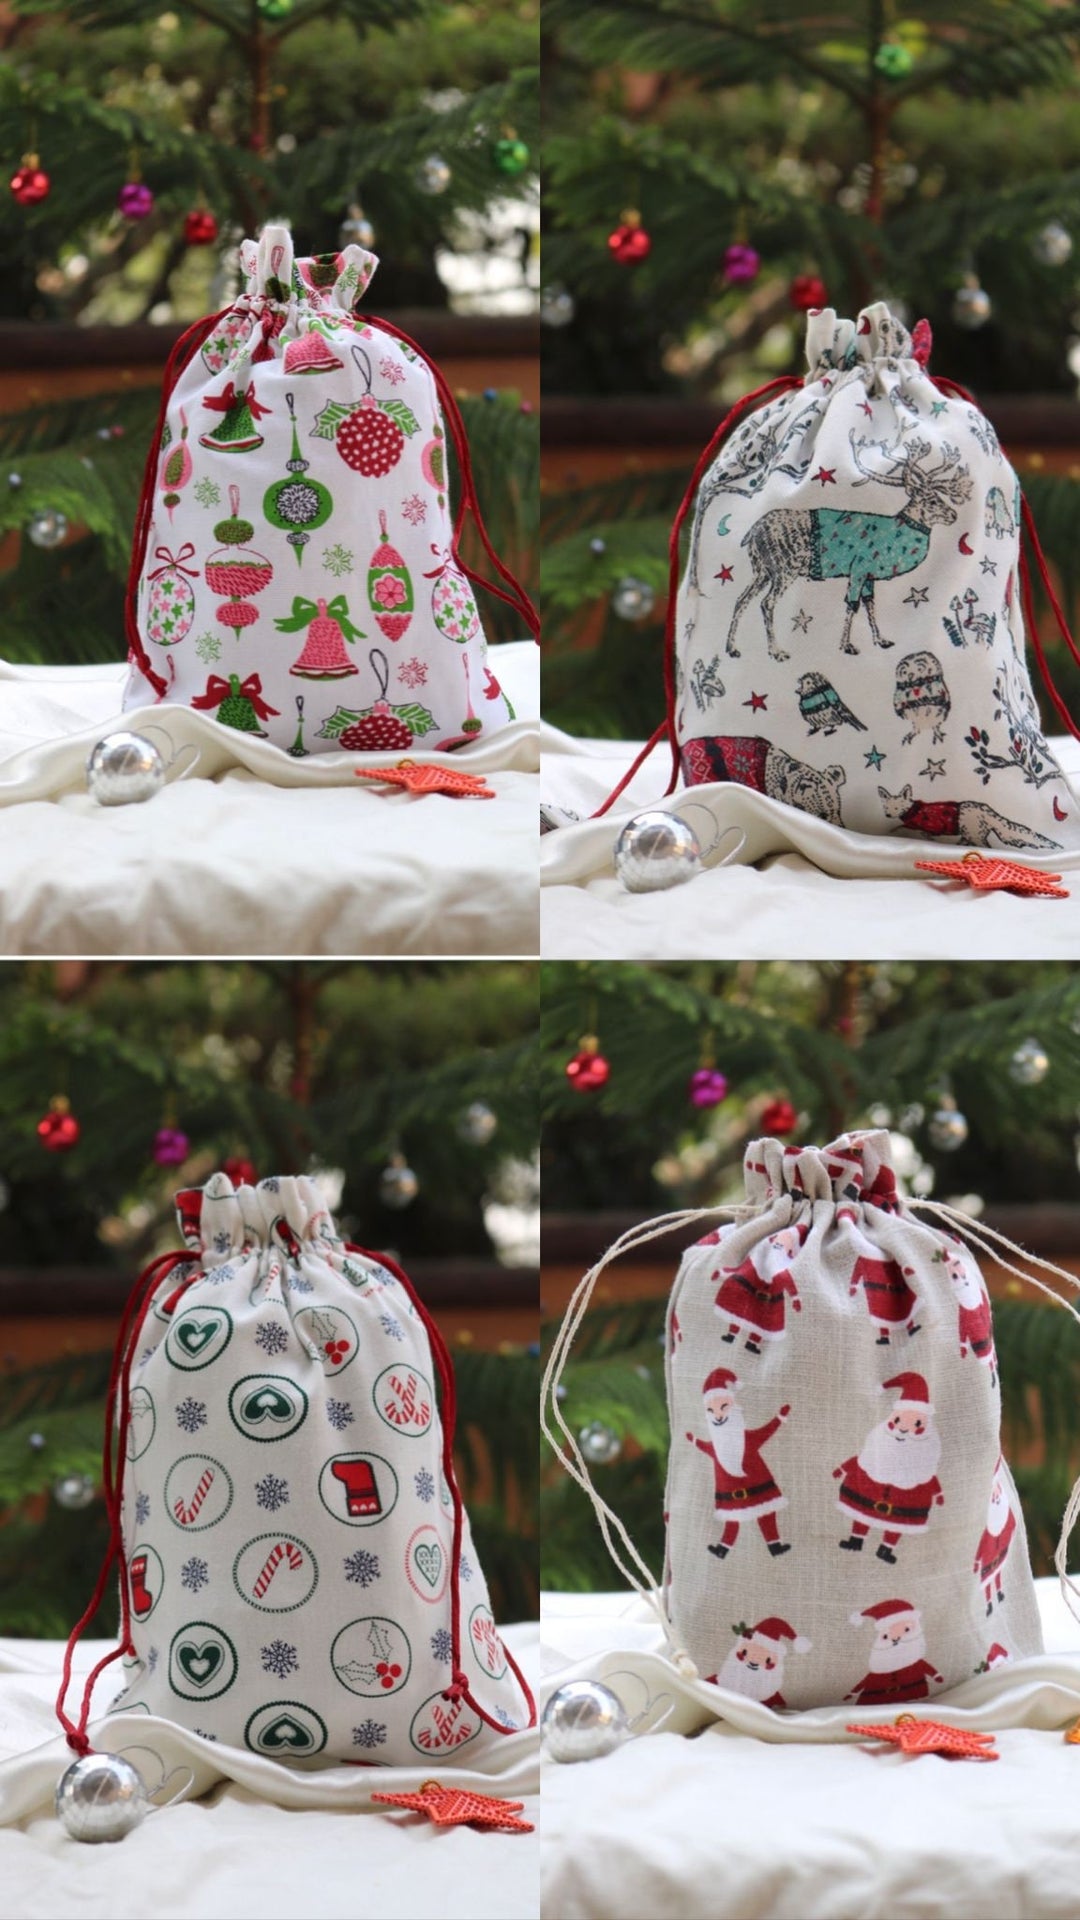 Christmas Santa bag, Santa bag, Santa sack, Fabric gift bag, Holiday sack, Holiday bag, Merry Christmas gift bag, Christmas fabric gift bag